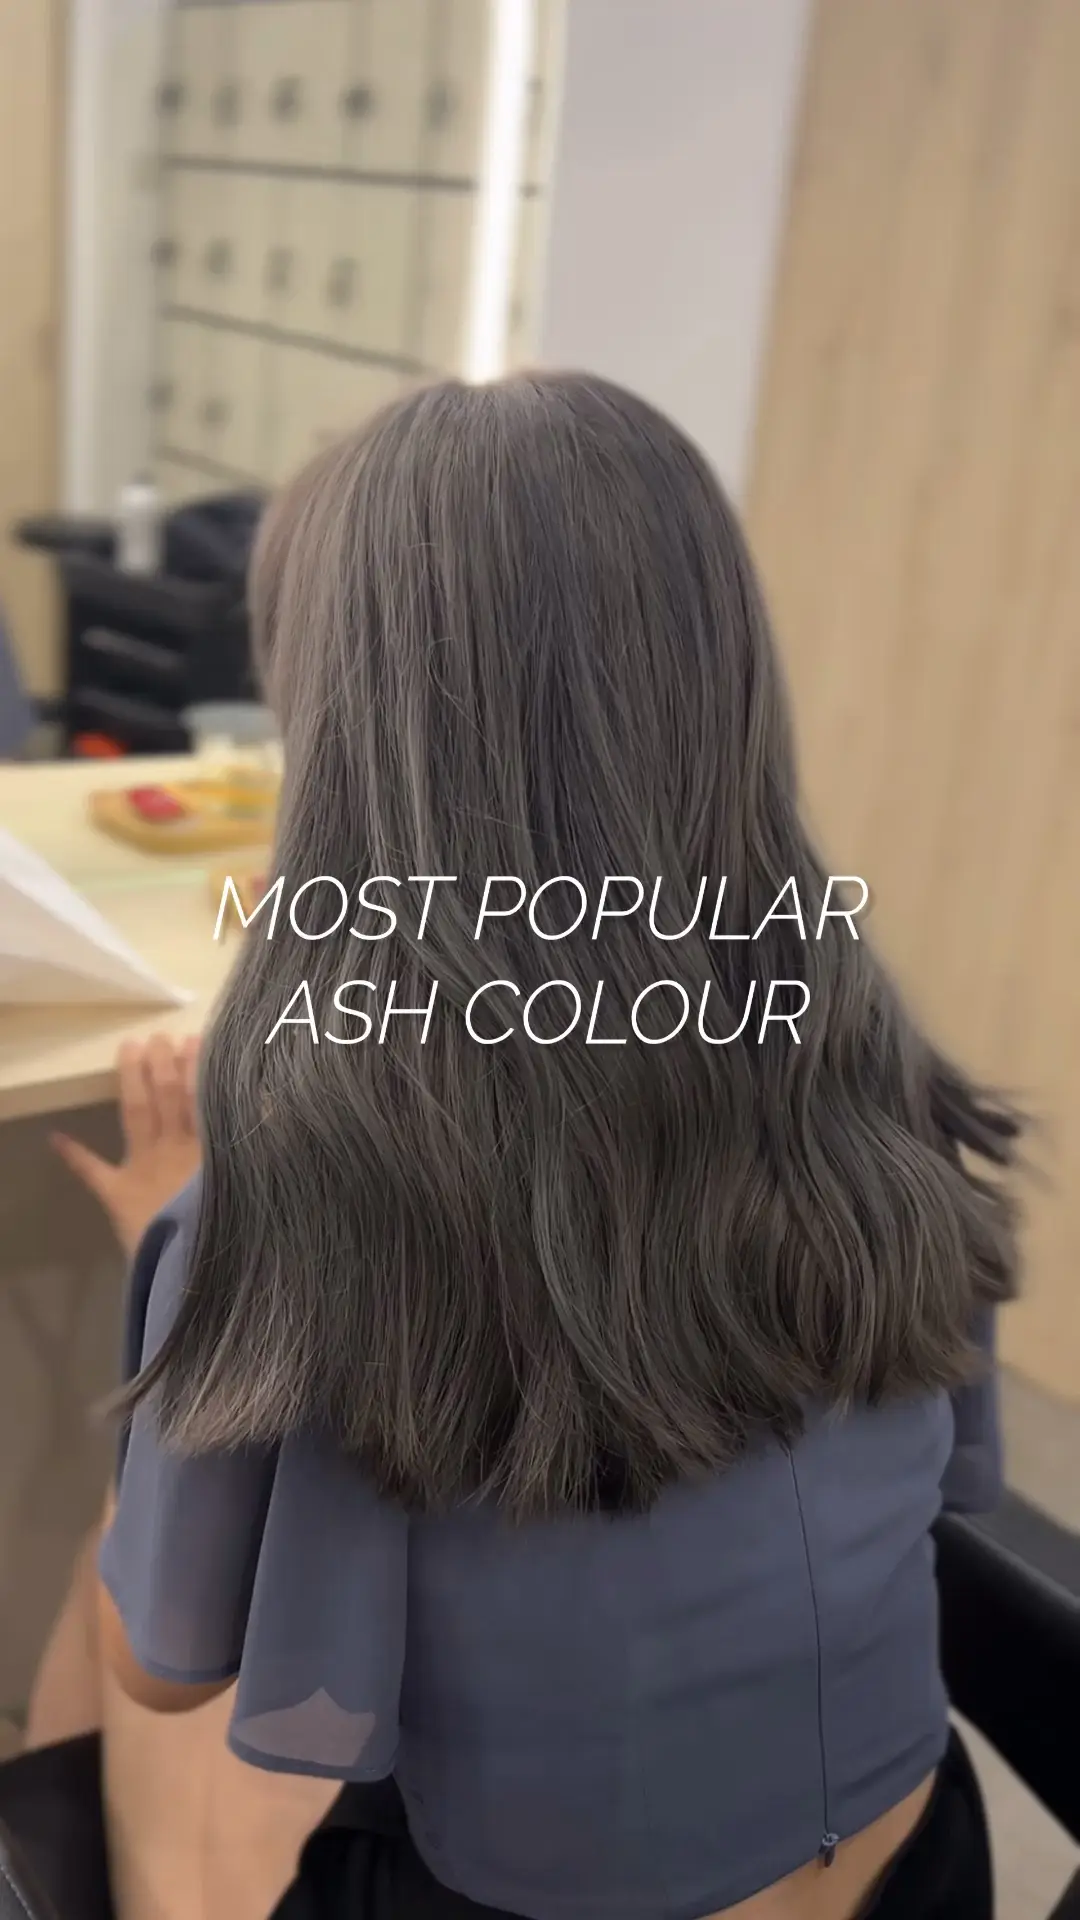 Ash grey dye 😍💕, Video published by Harts salon